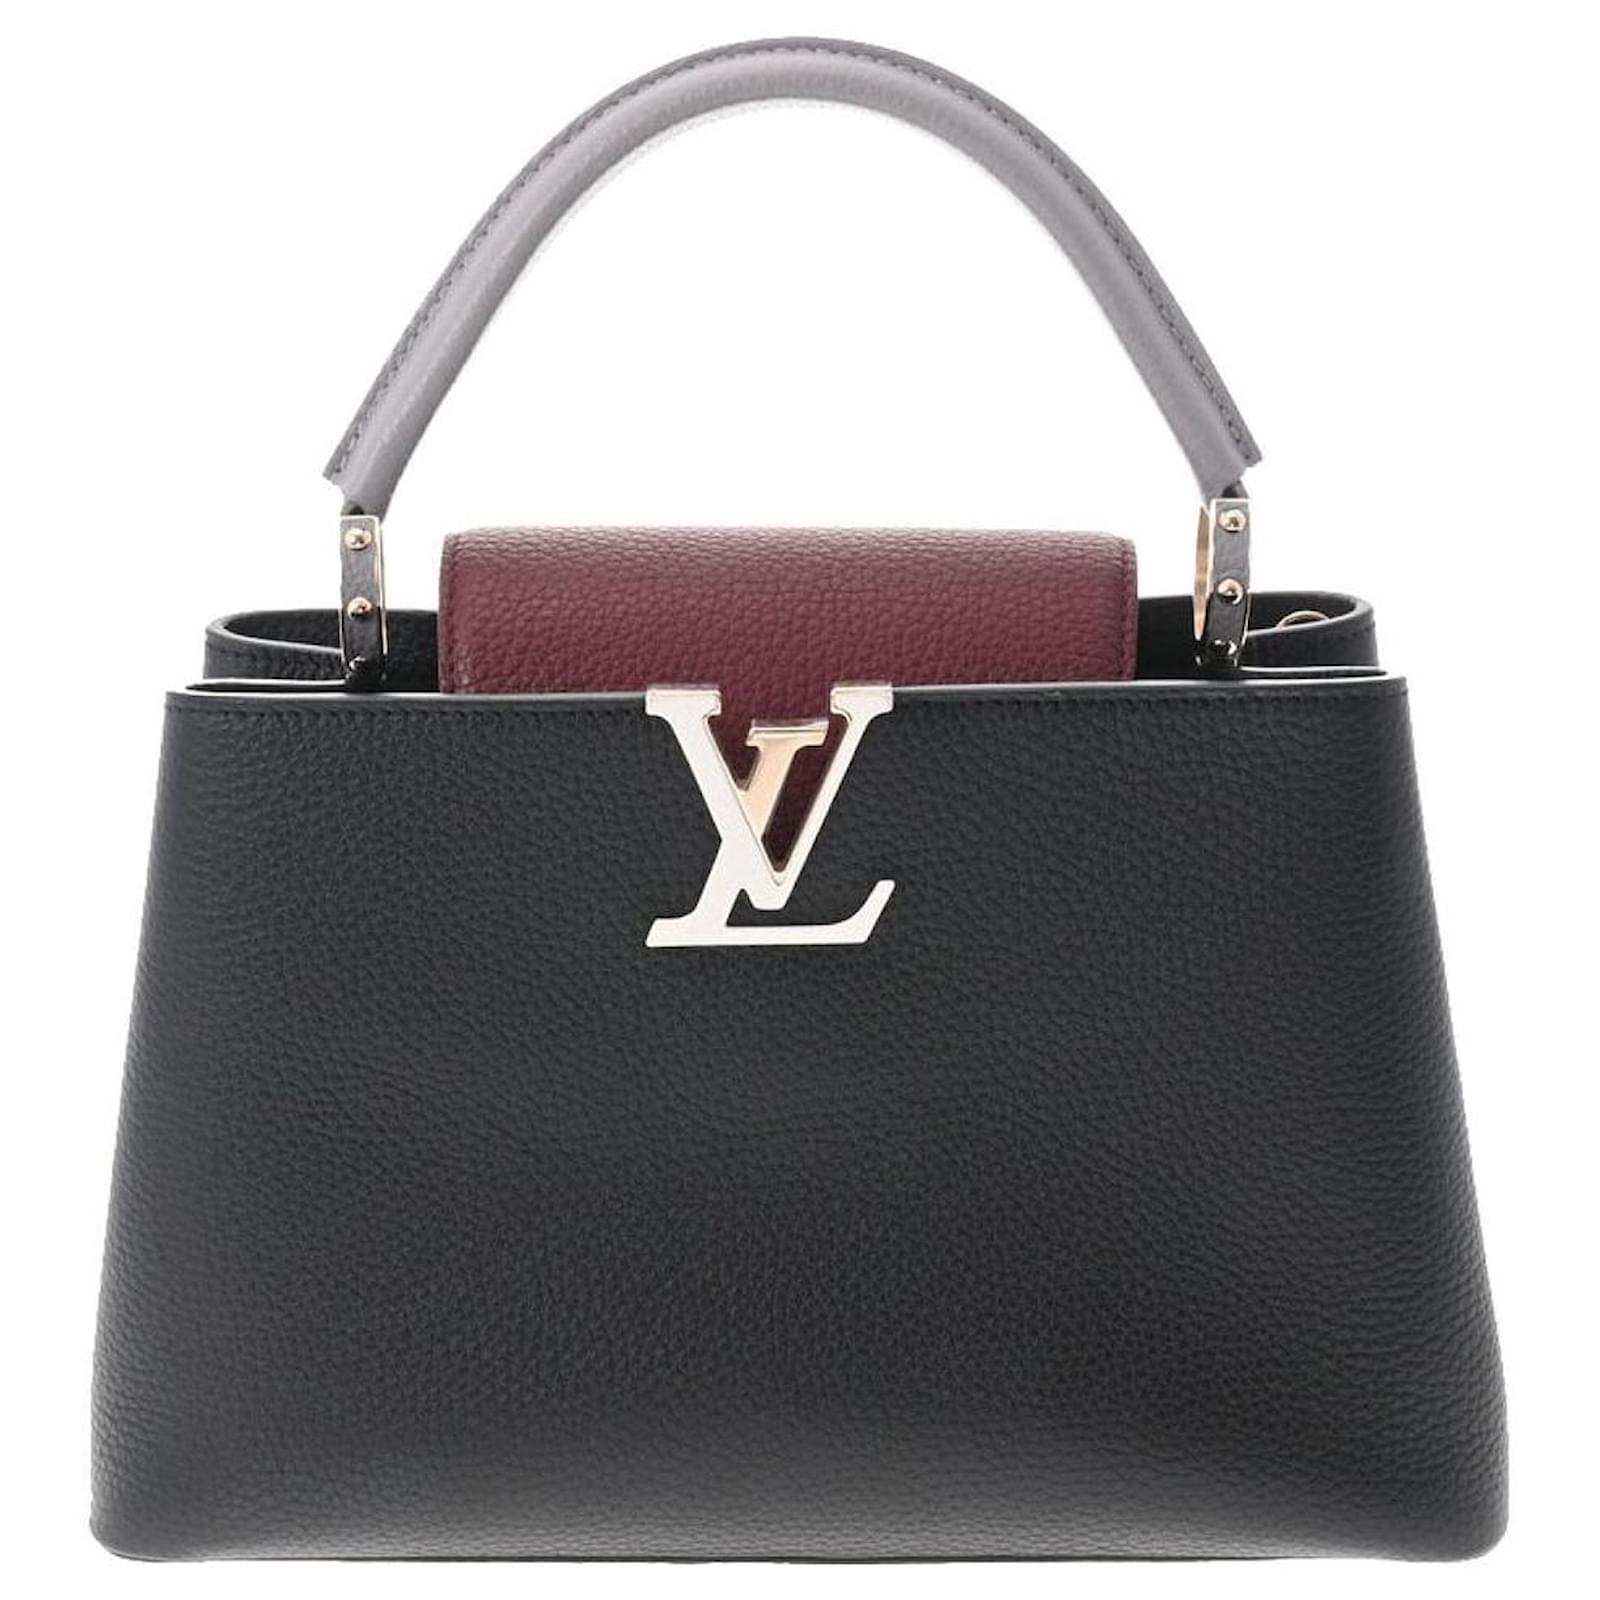 LOUIS VUITTON Taurillon Clemence Capucines MM M42253 Handbag from